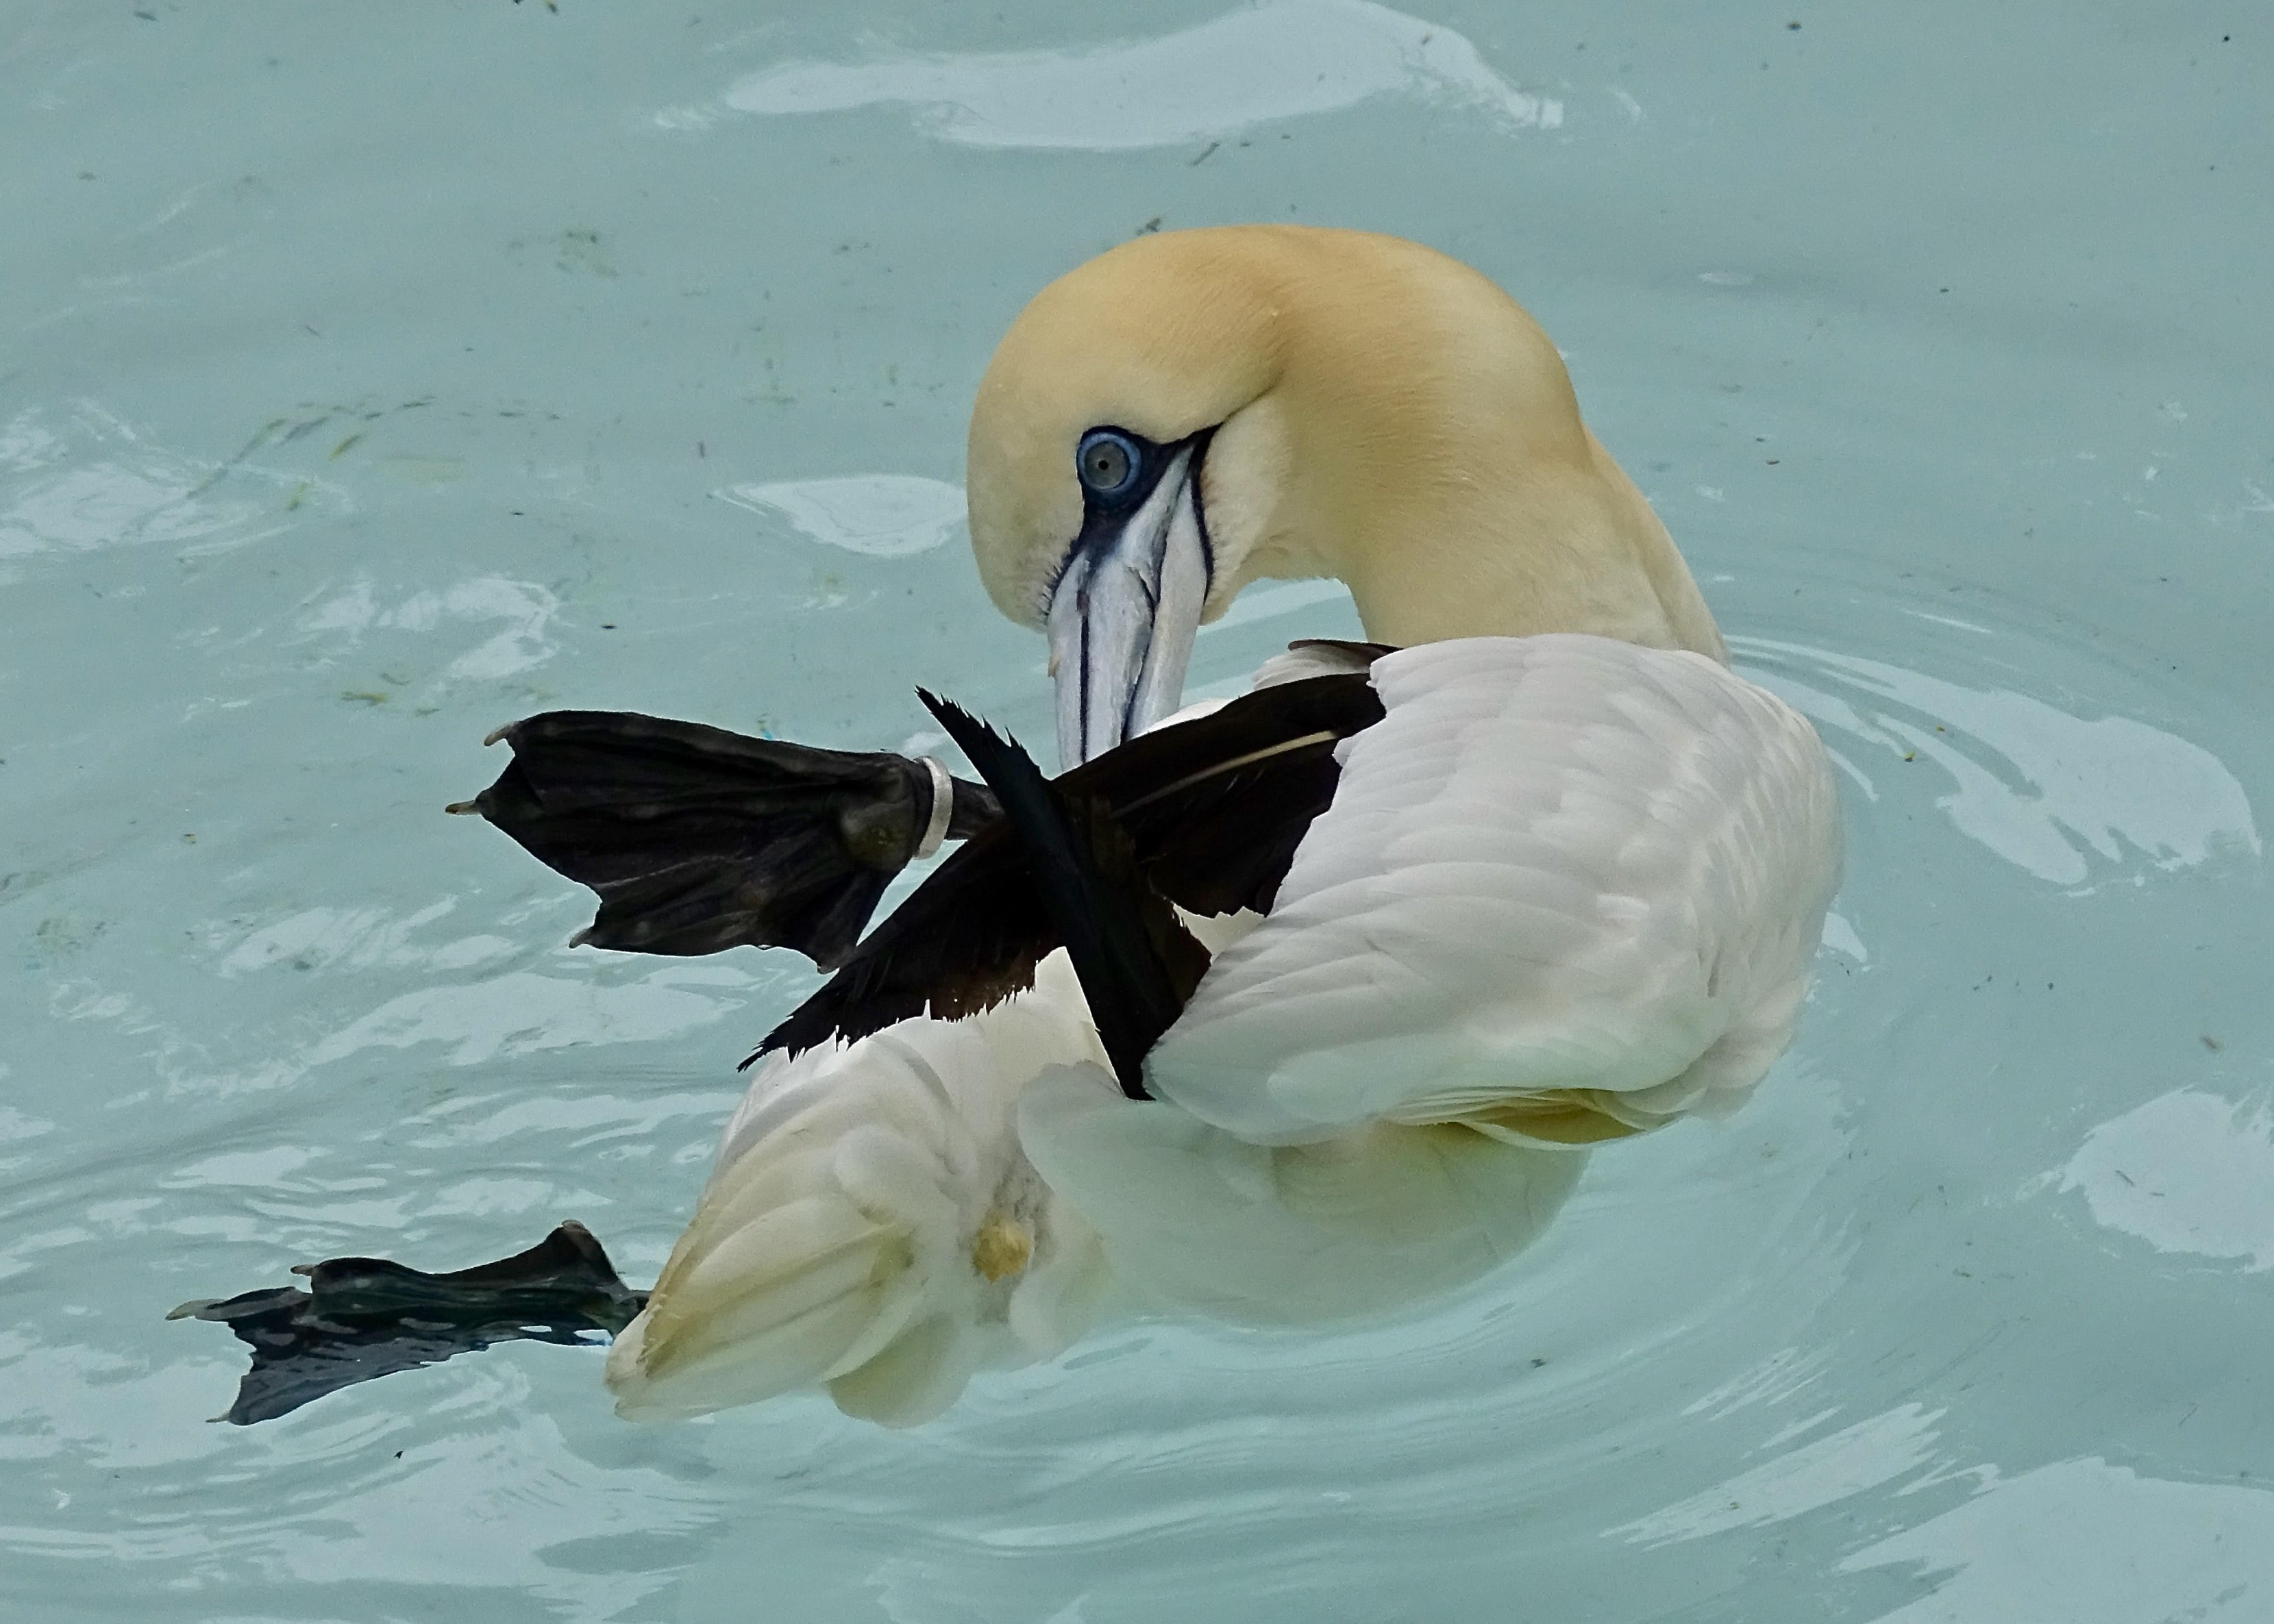 Aquatic behavior of birds